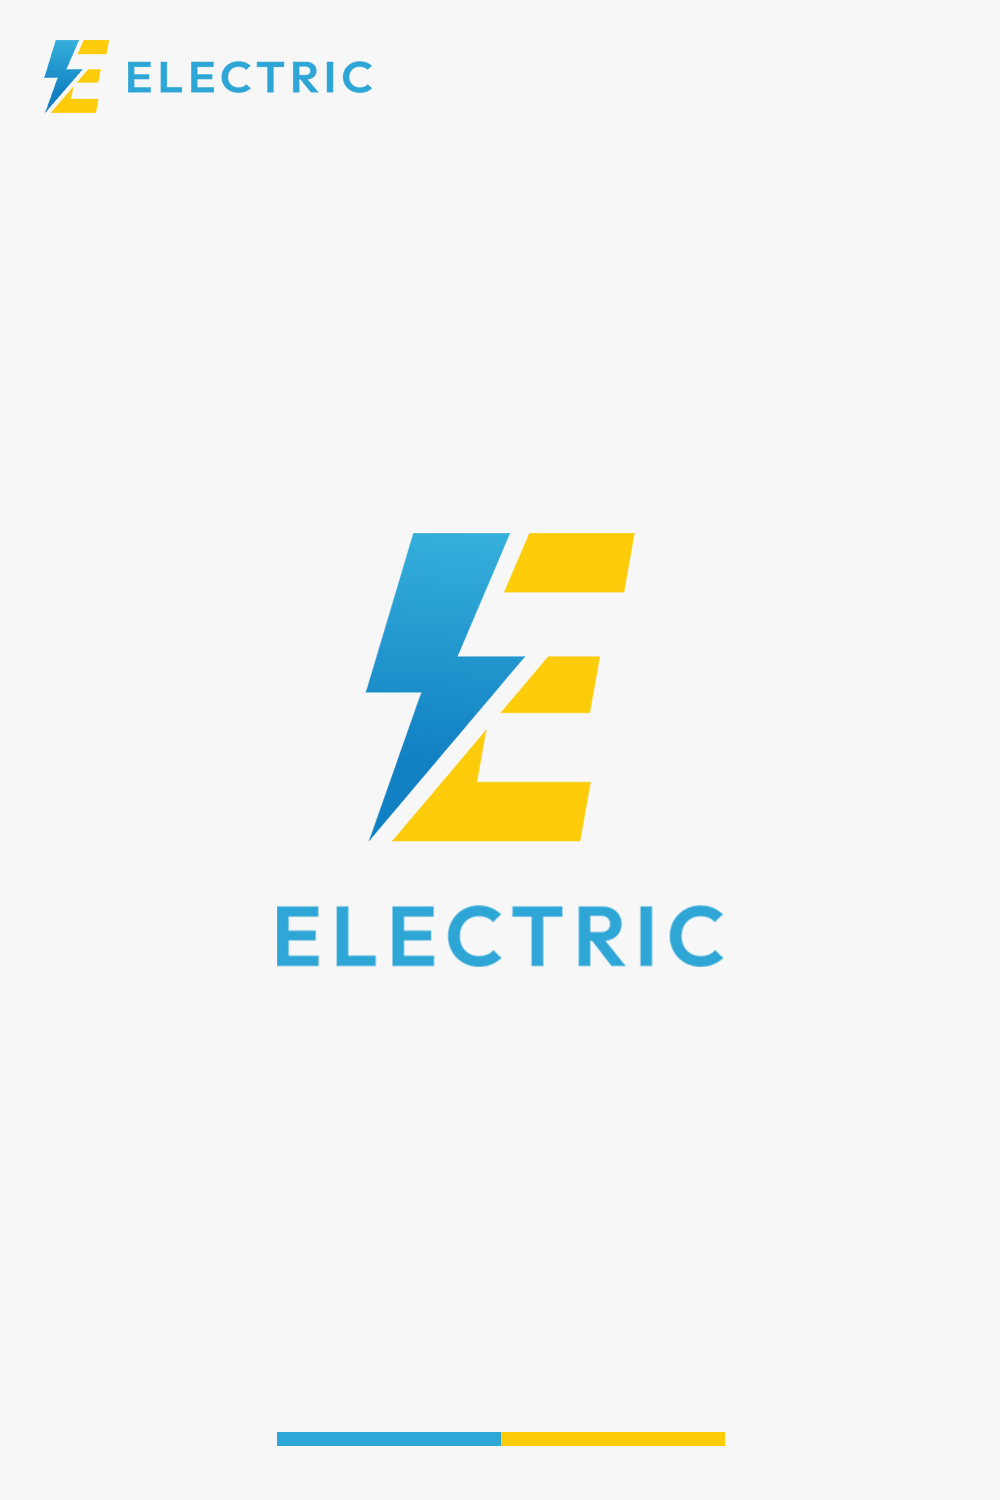 Electric Logo Template, E Letter Logo Design pinterest preview image.